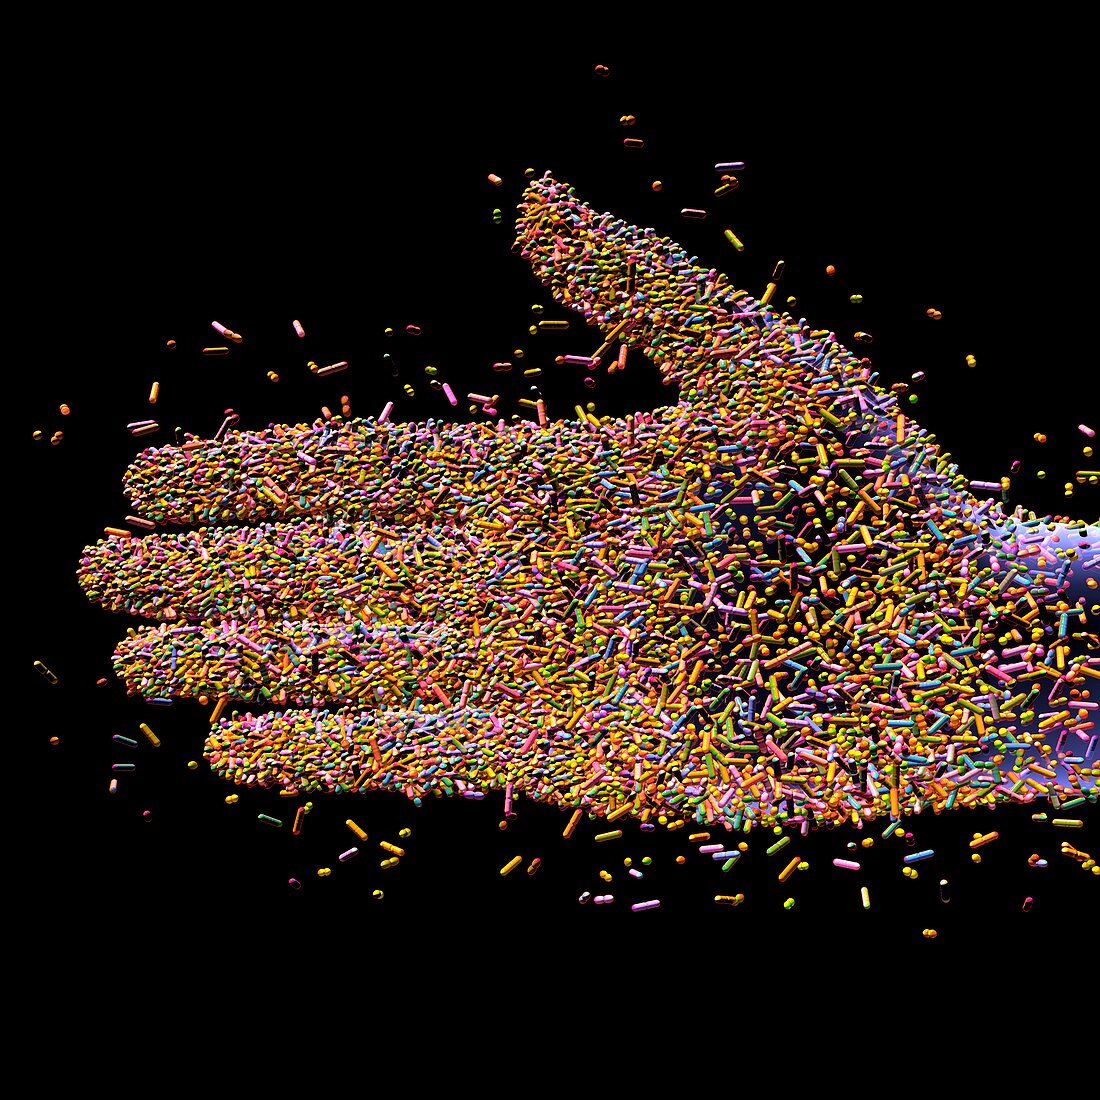 Hand microbiome, conceptual illustration